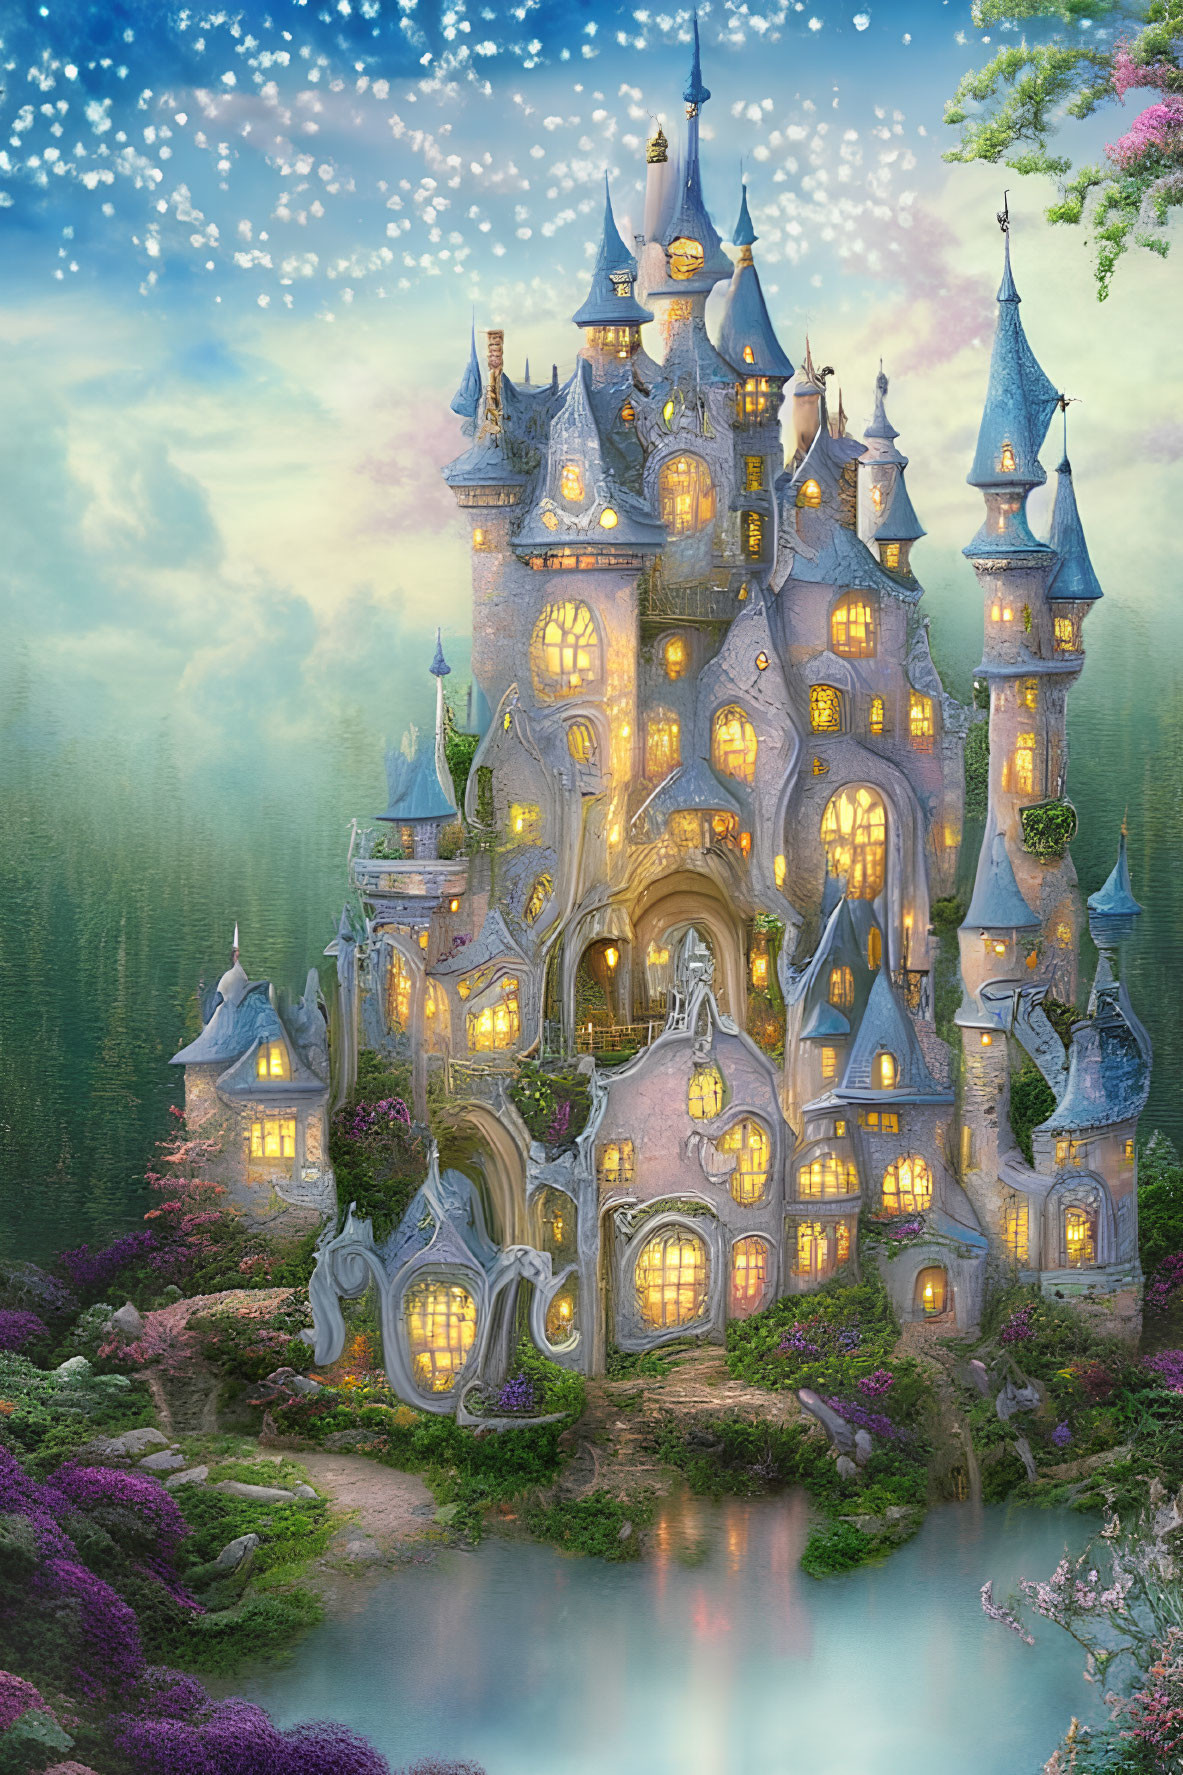 Enchanting fairytale castle in lush greenery with illuminated windows